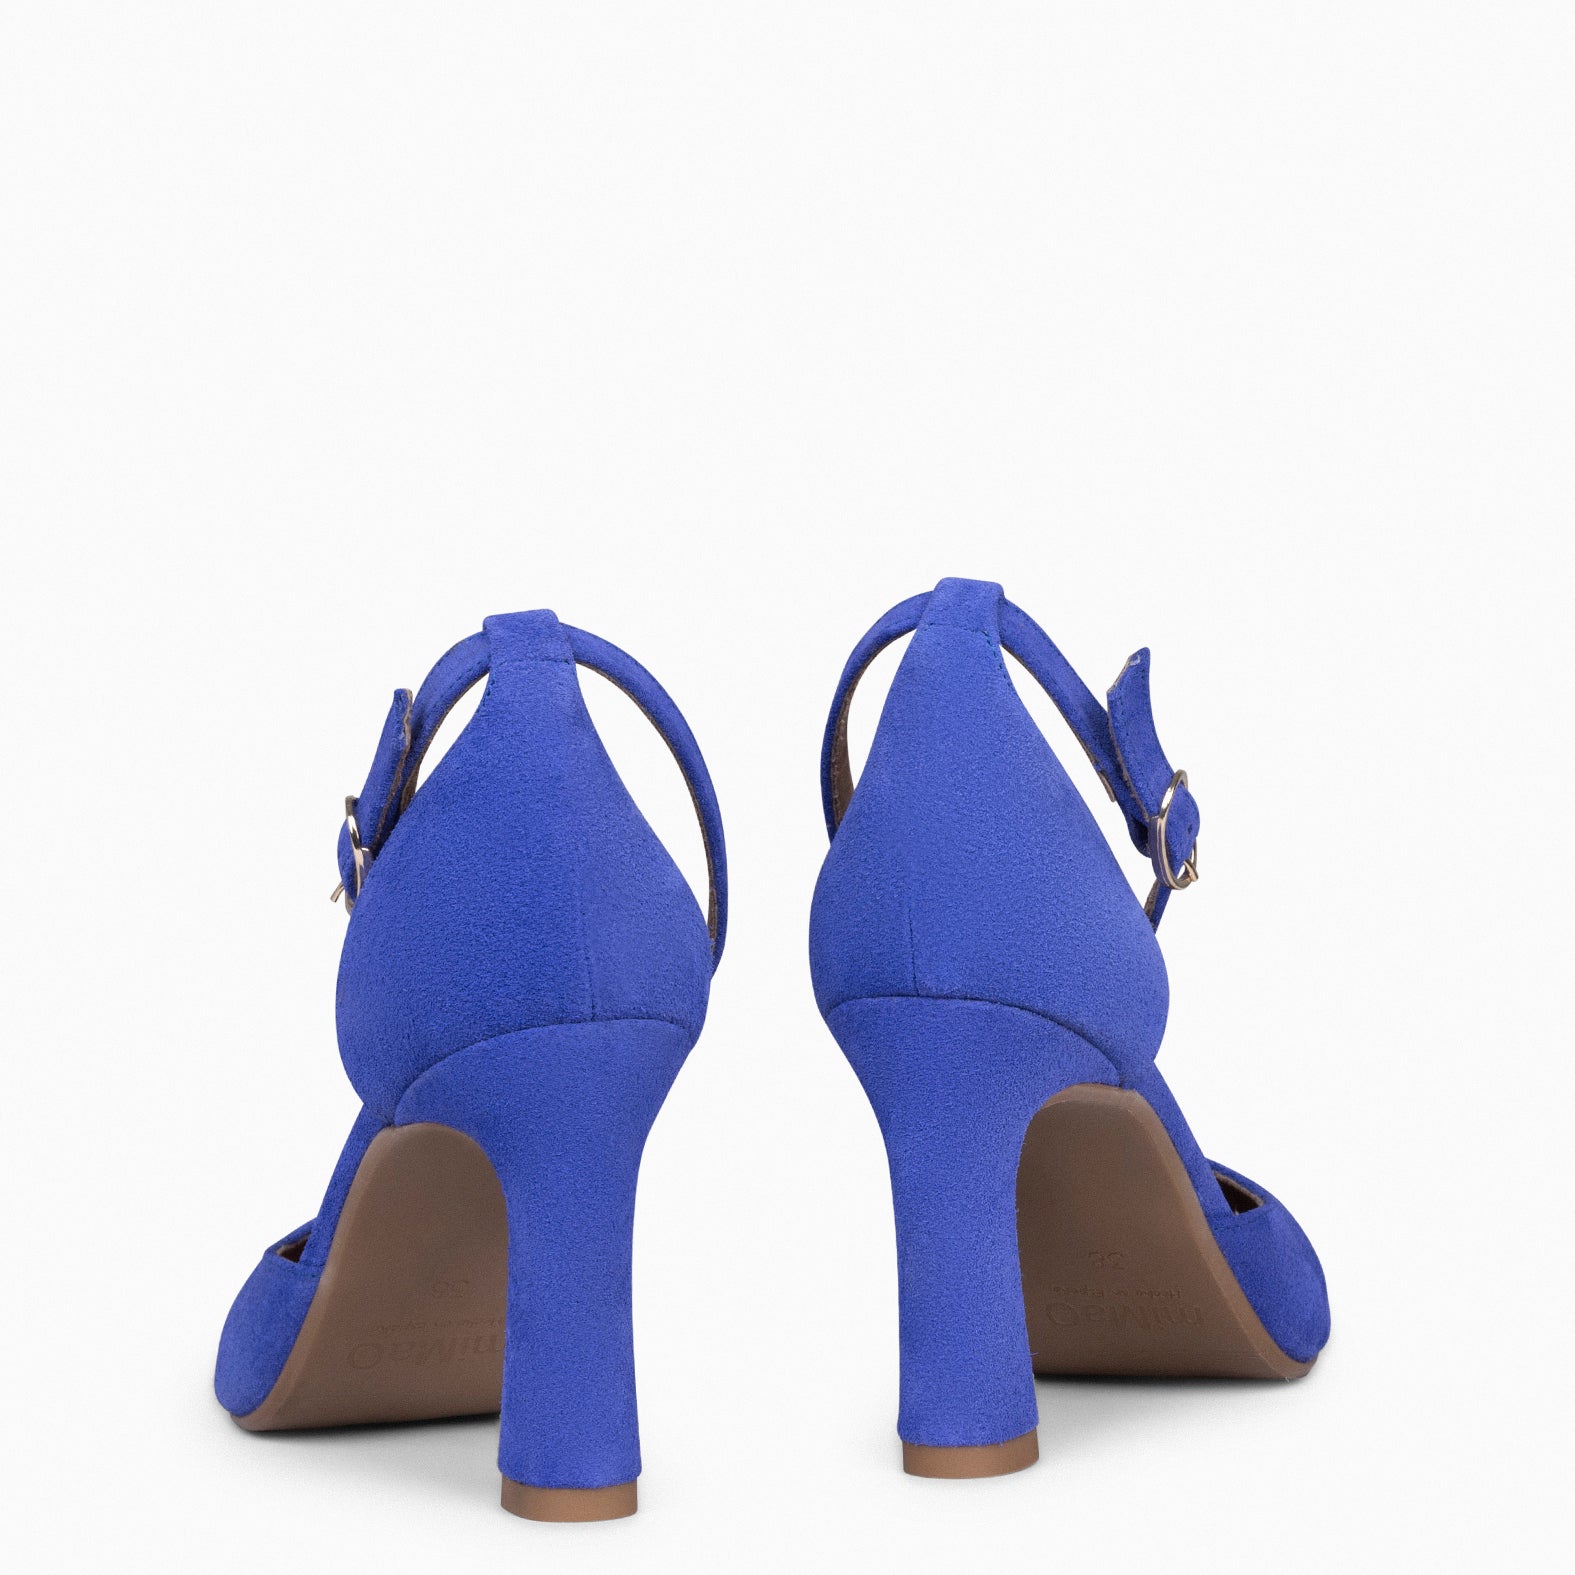 GALA - ELECTRIC BLUE elegant high heels 